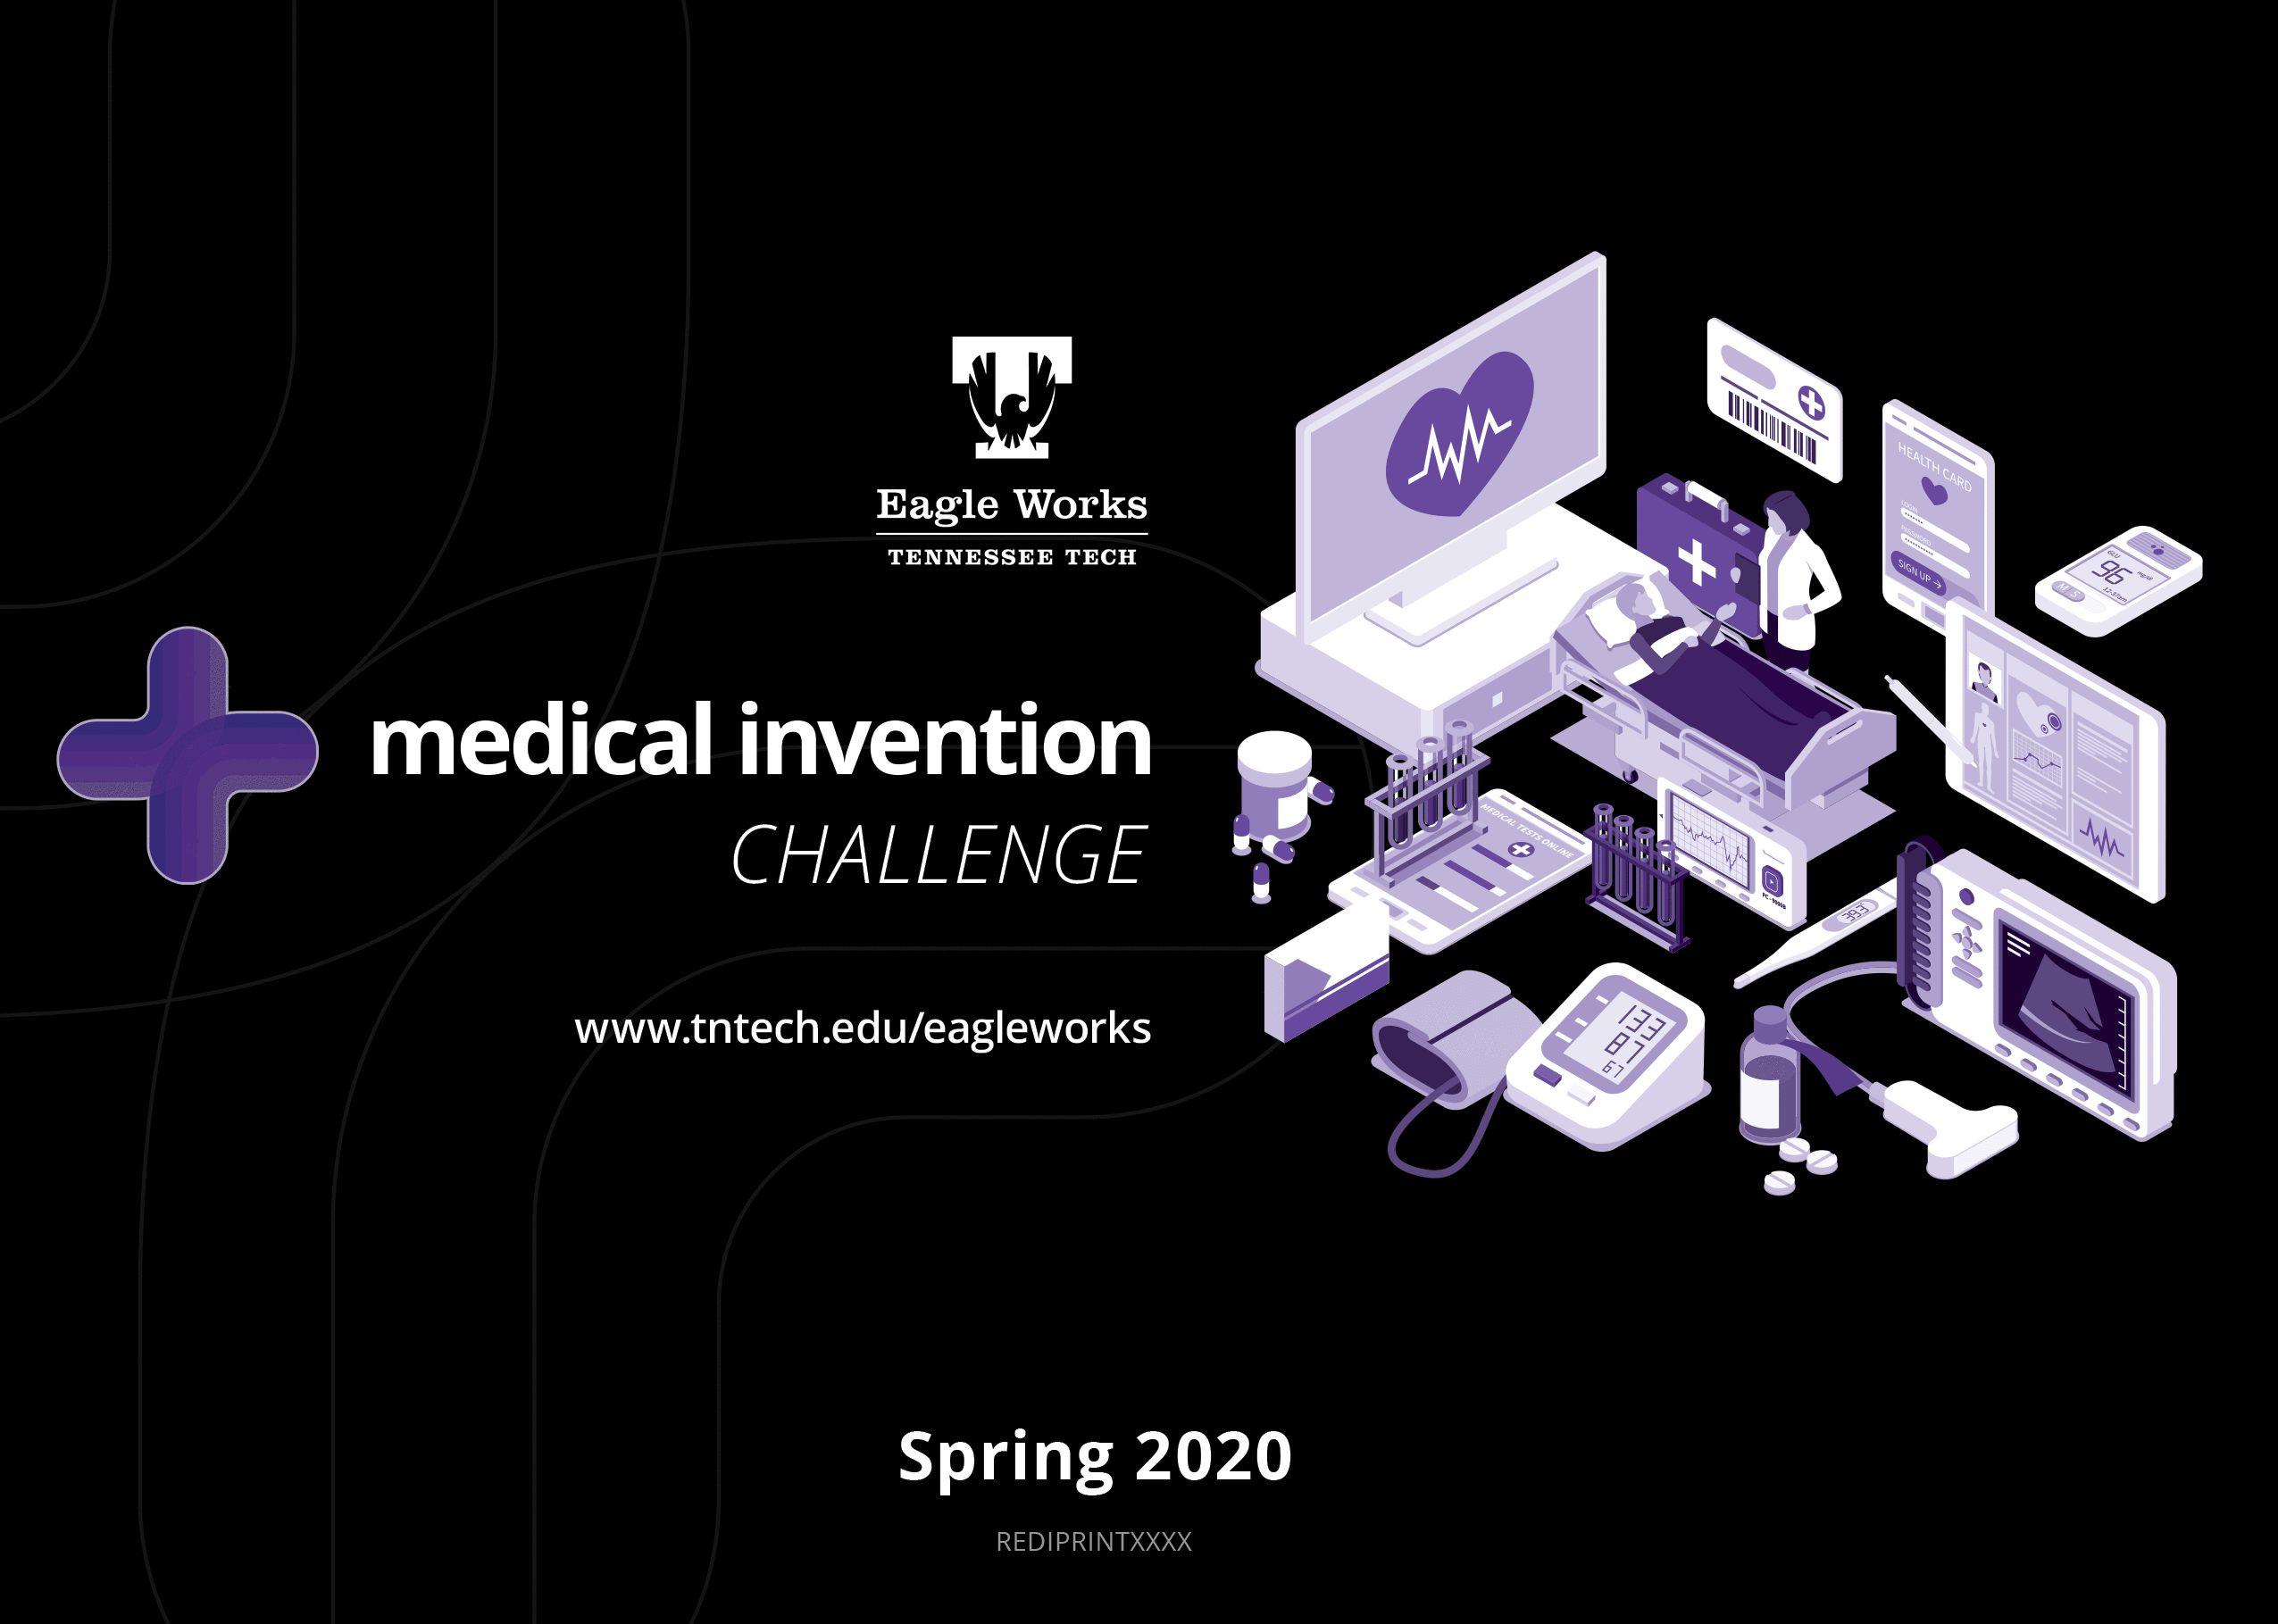 Medical invention challenge